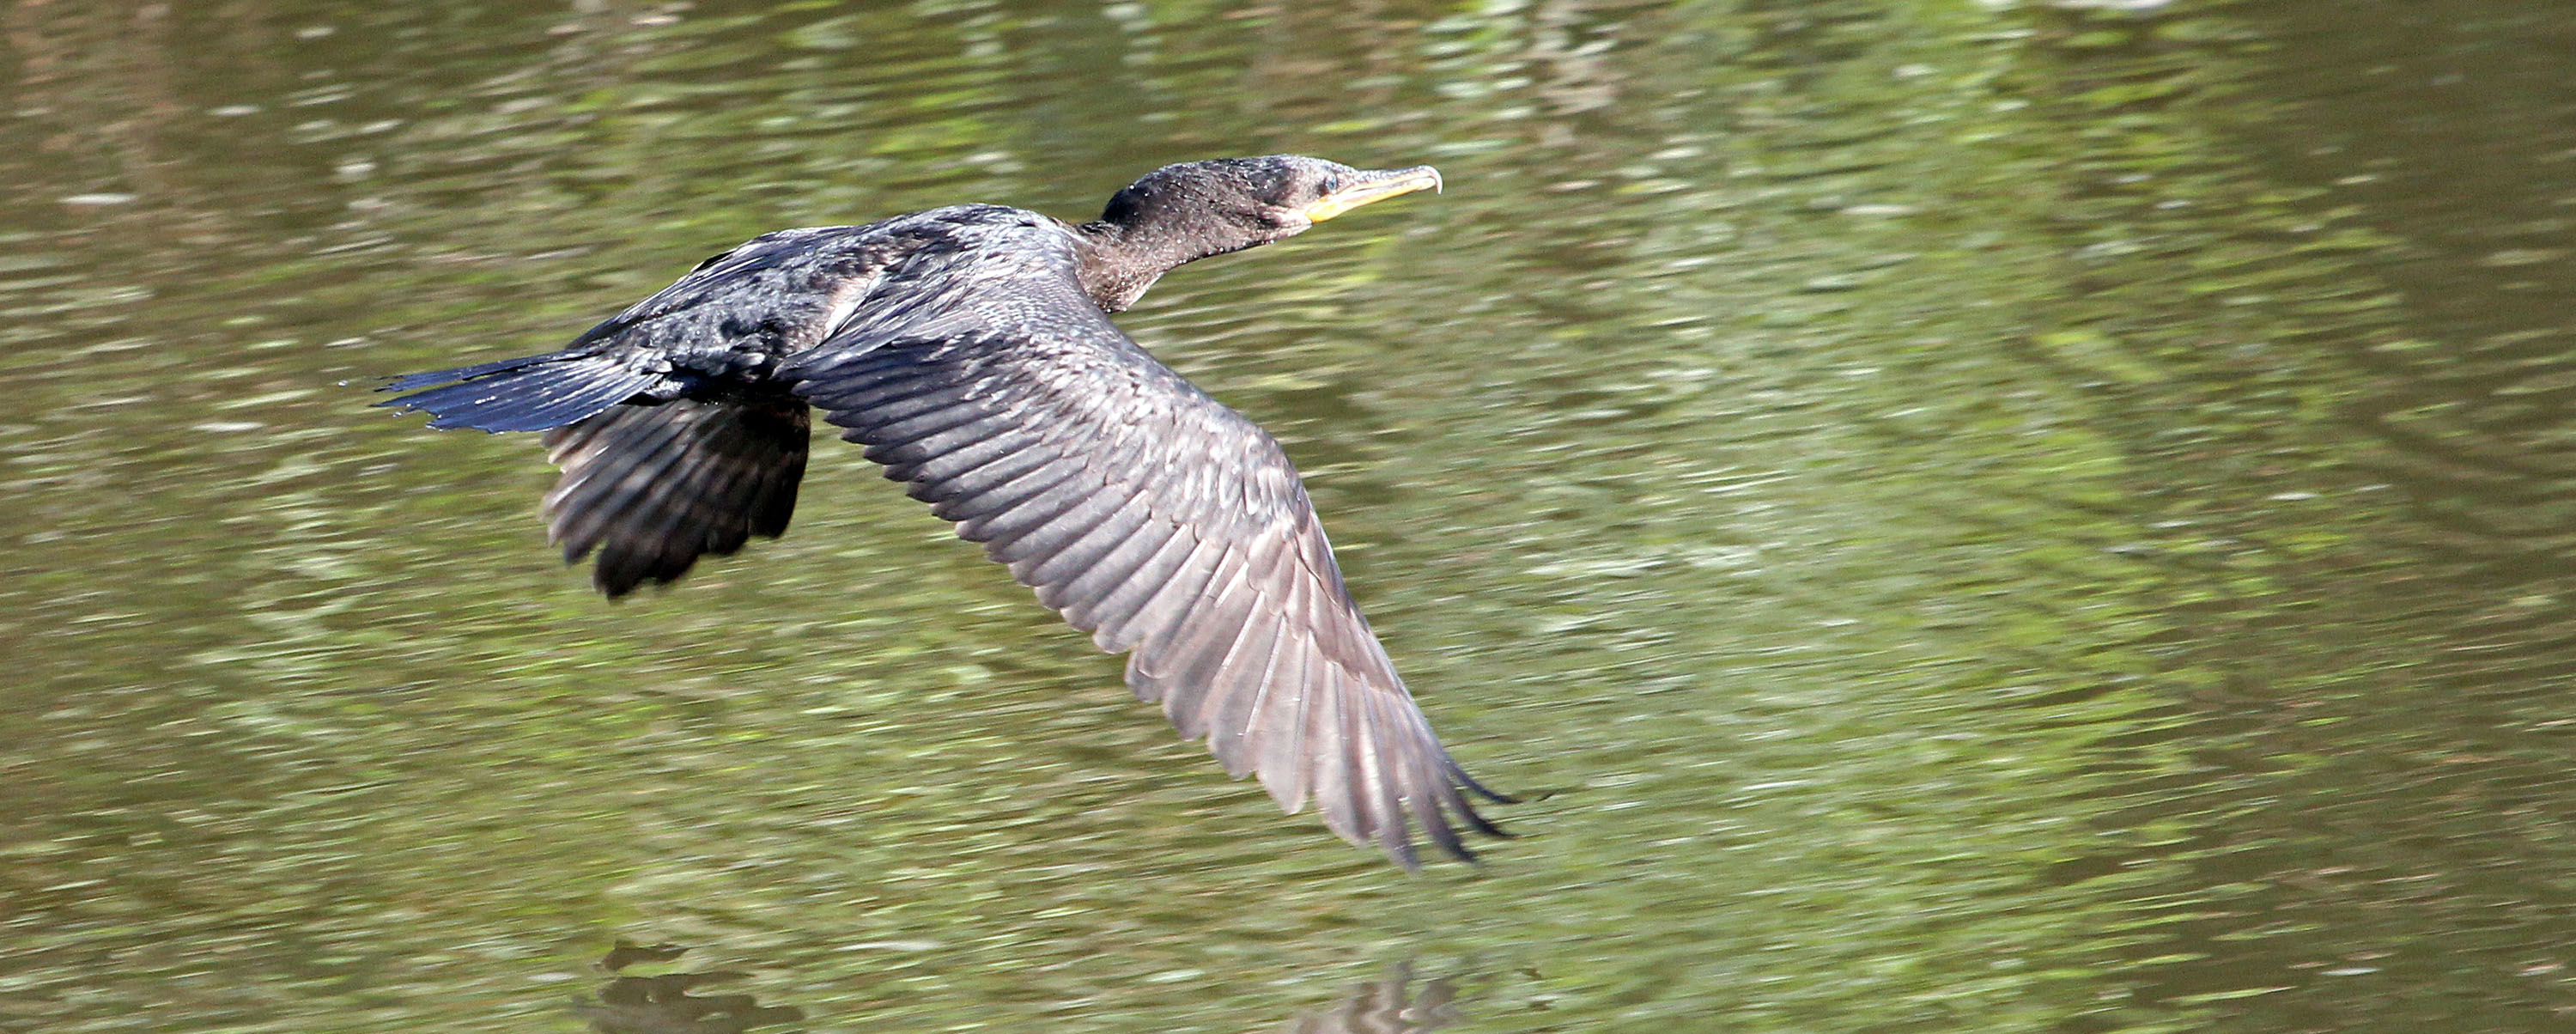 cormorant-neotropical-flying